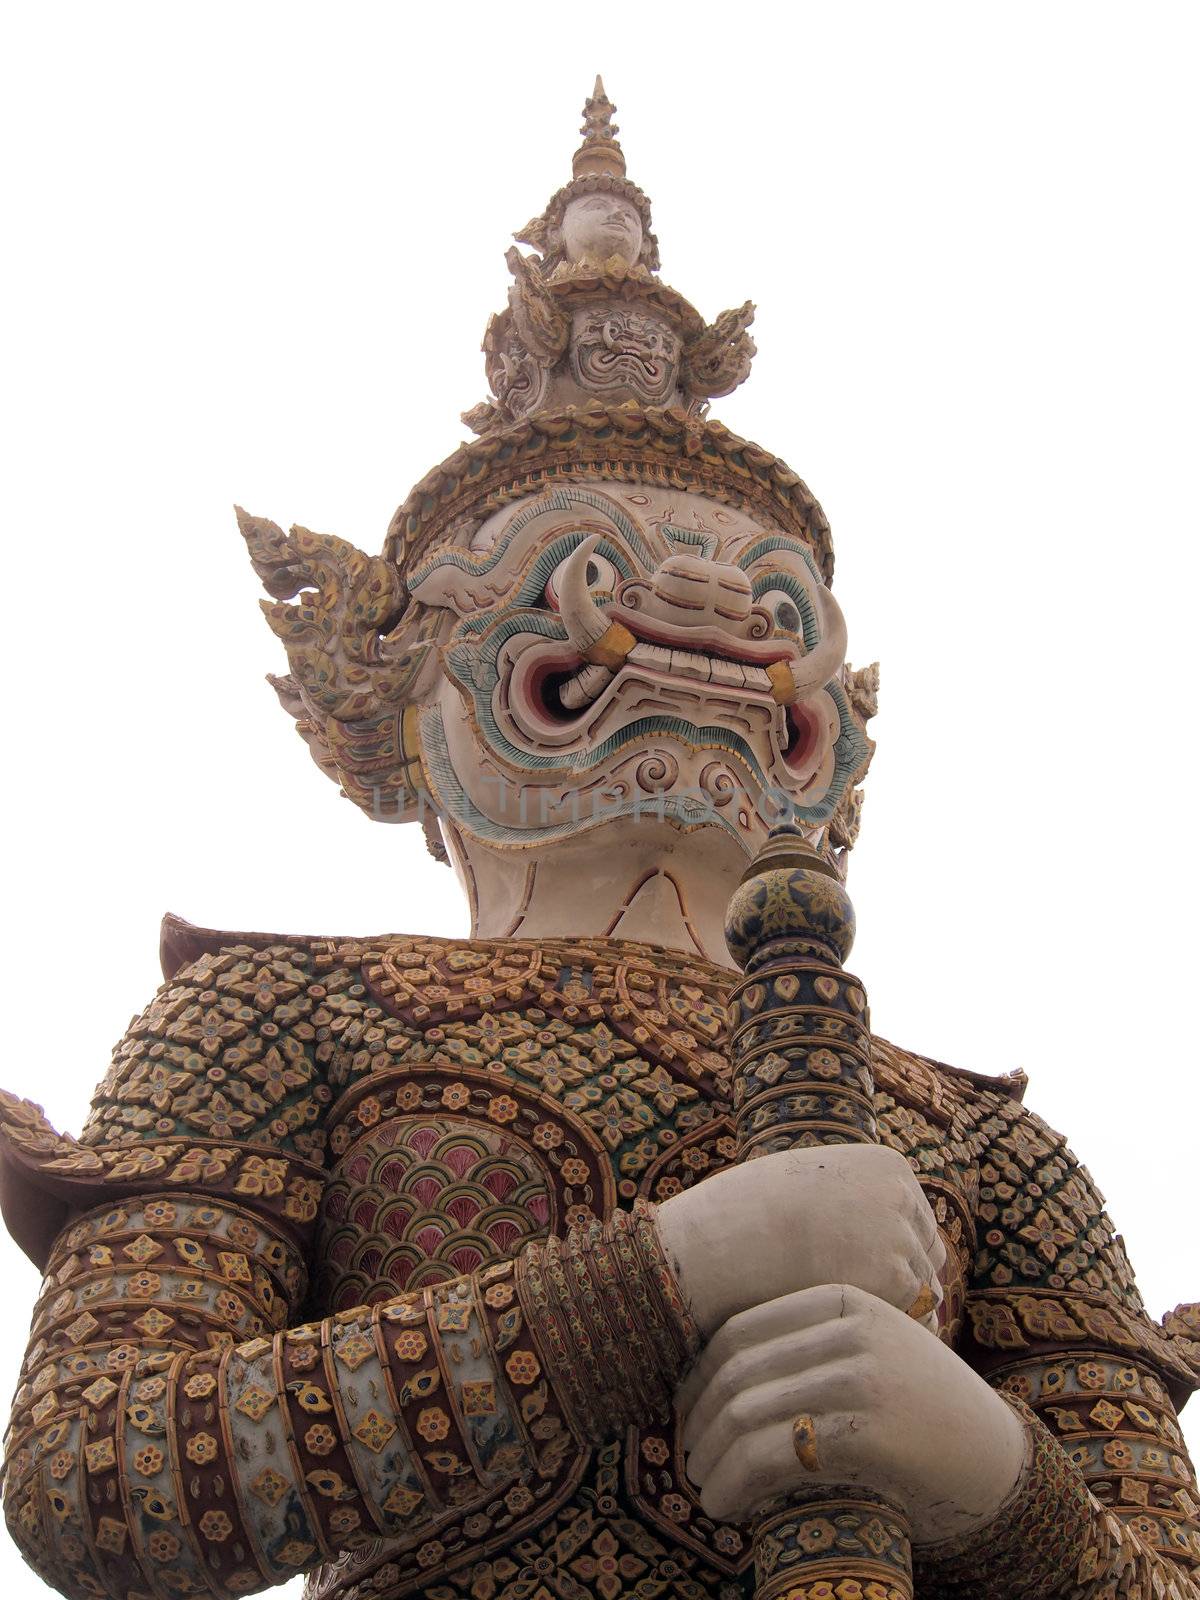 giant,the gaurdian at the emarald buddha temple,bankok,thailand     